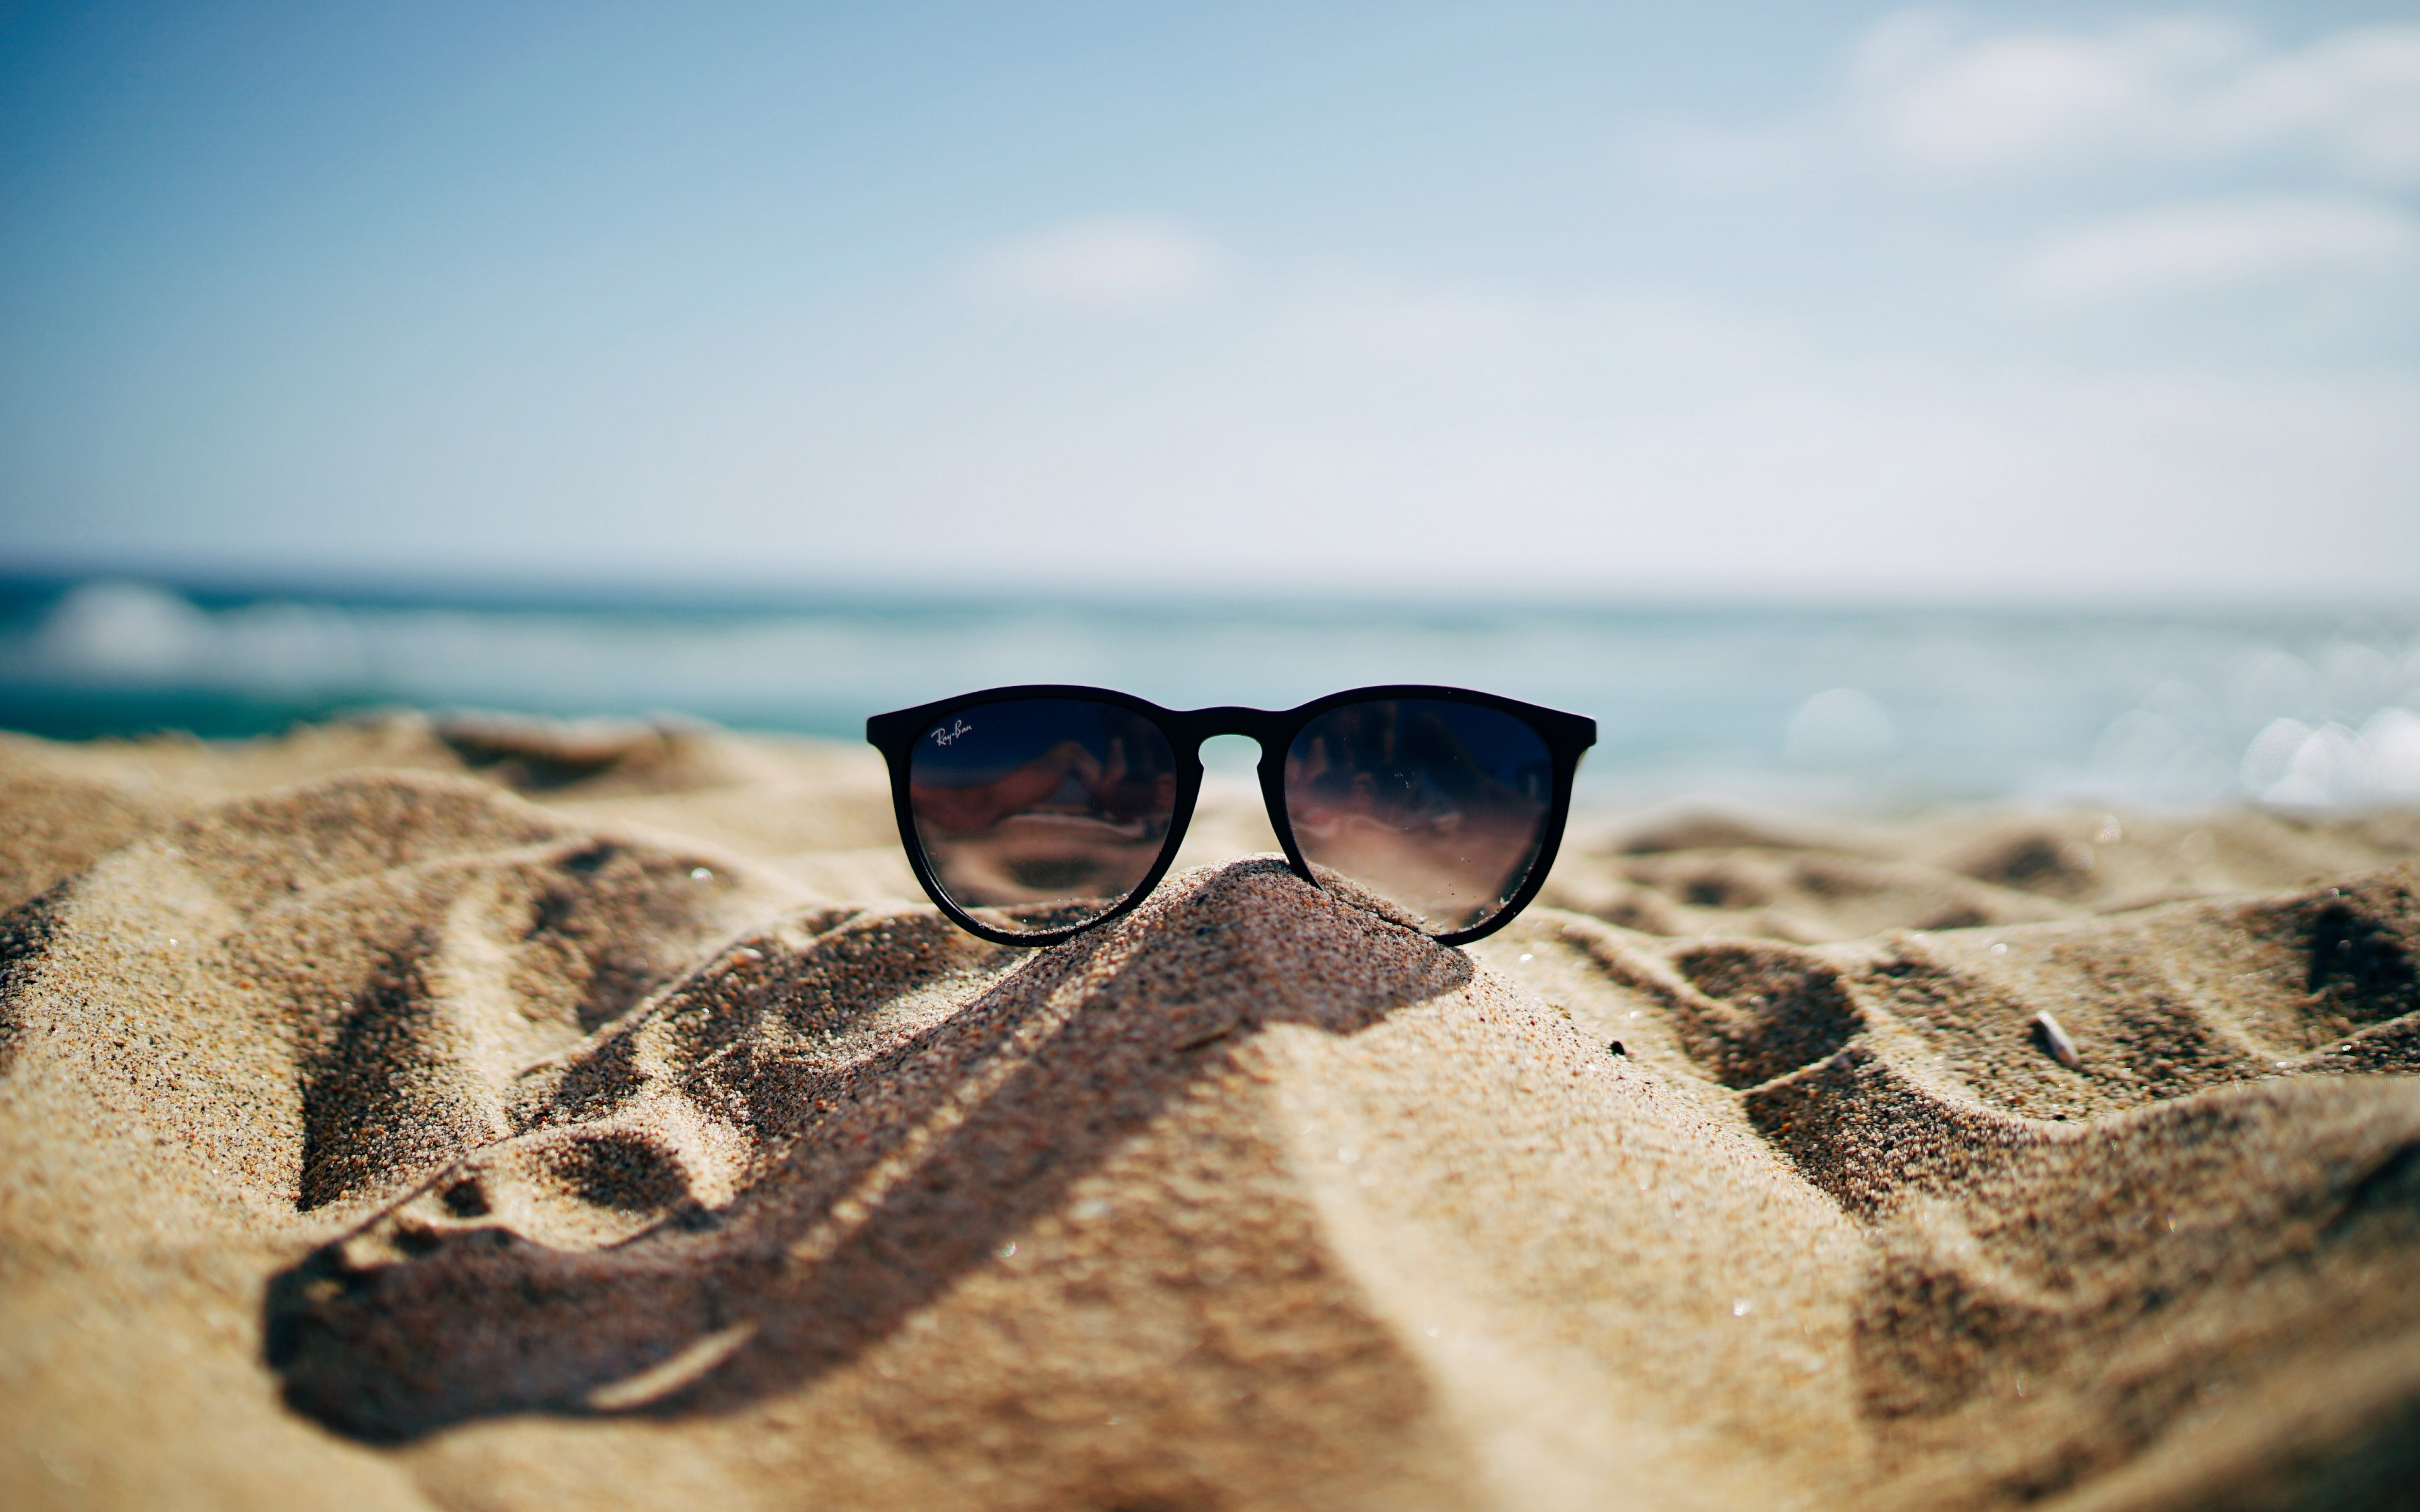 Ray Ban sunglasses on hot sand beach wallpaper 3840x2400